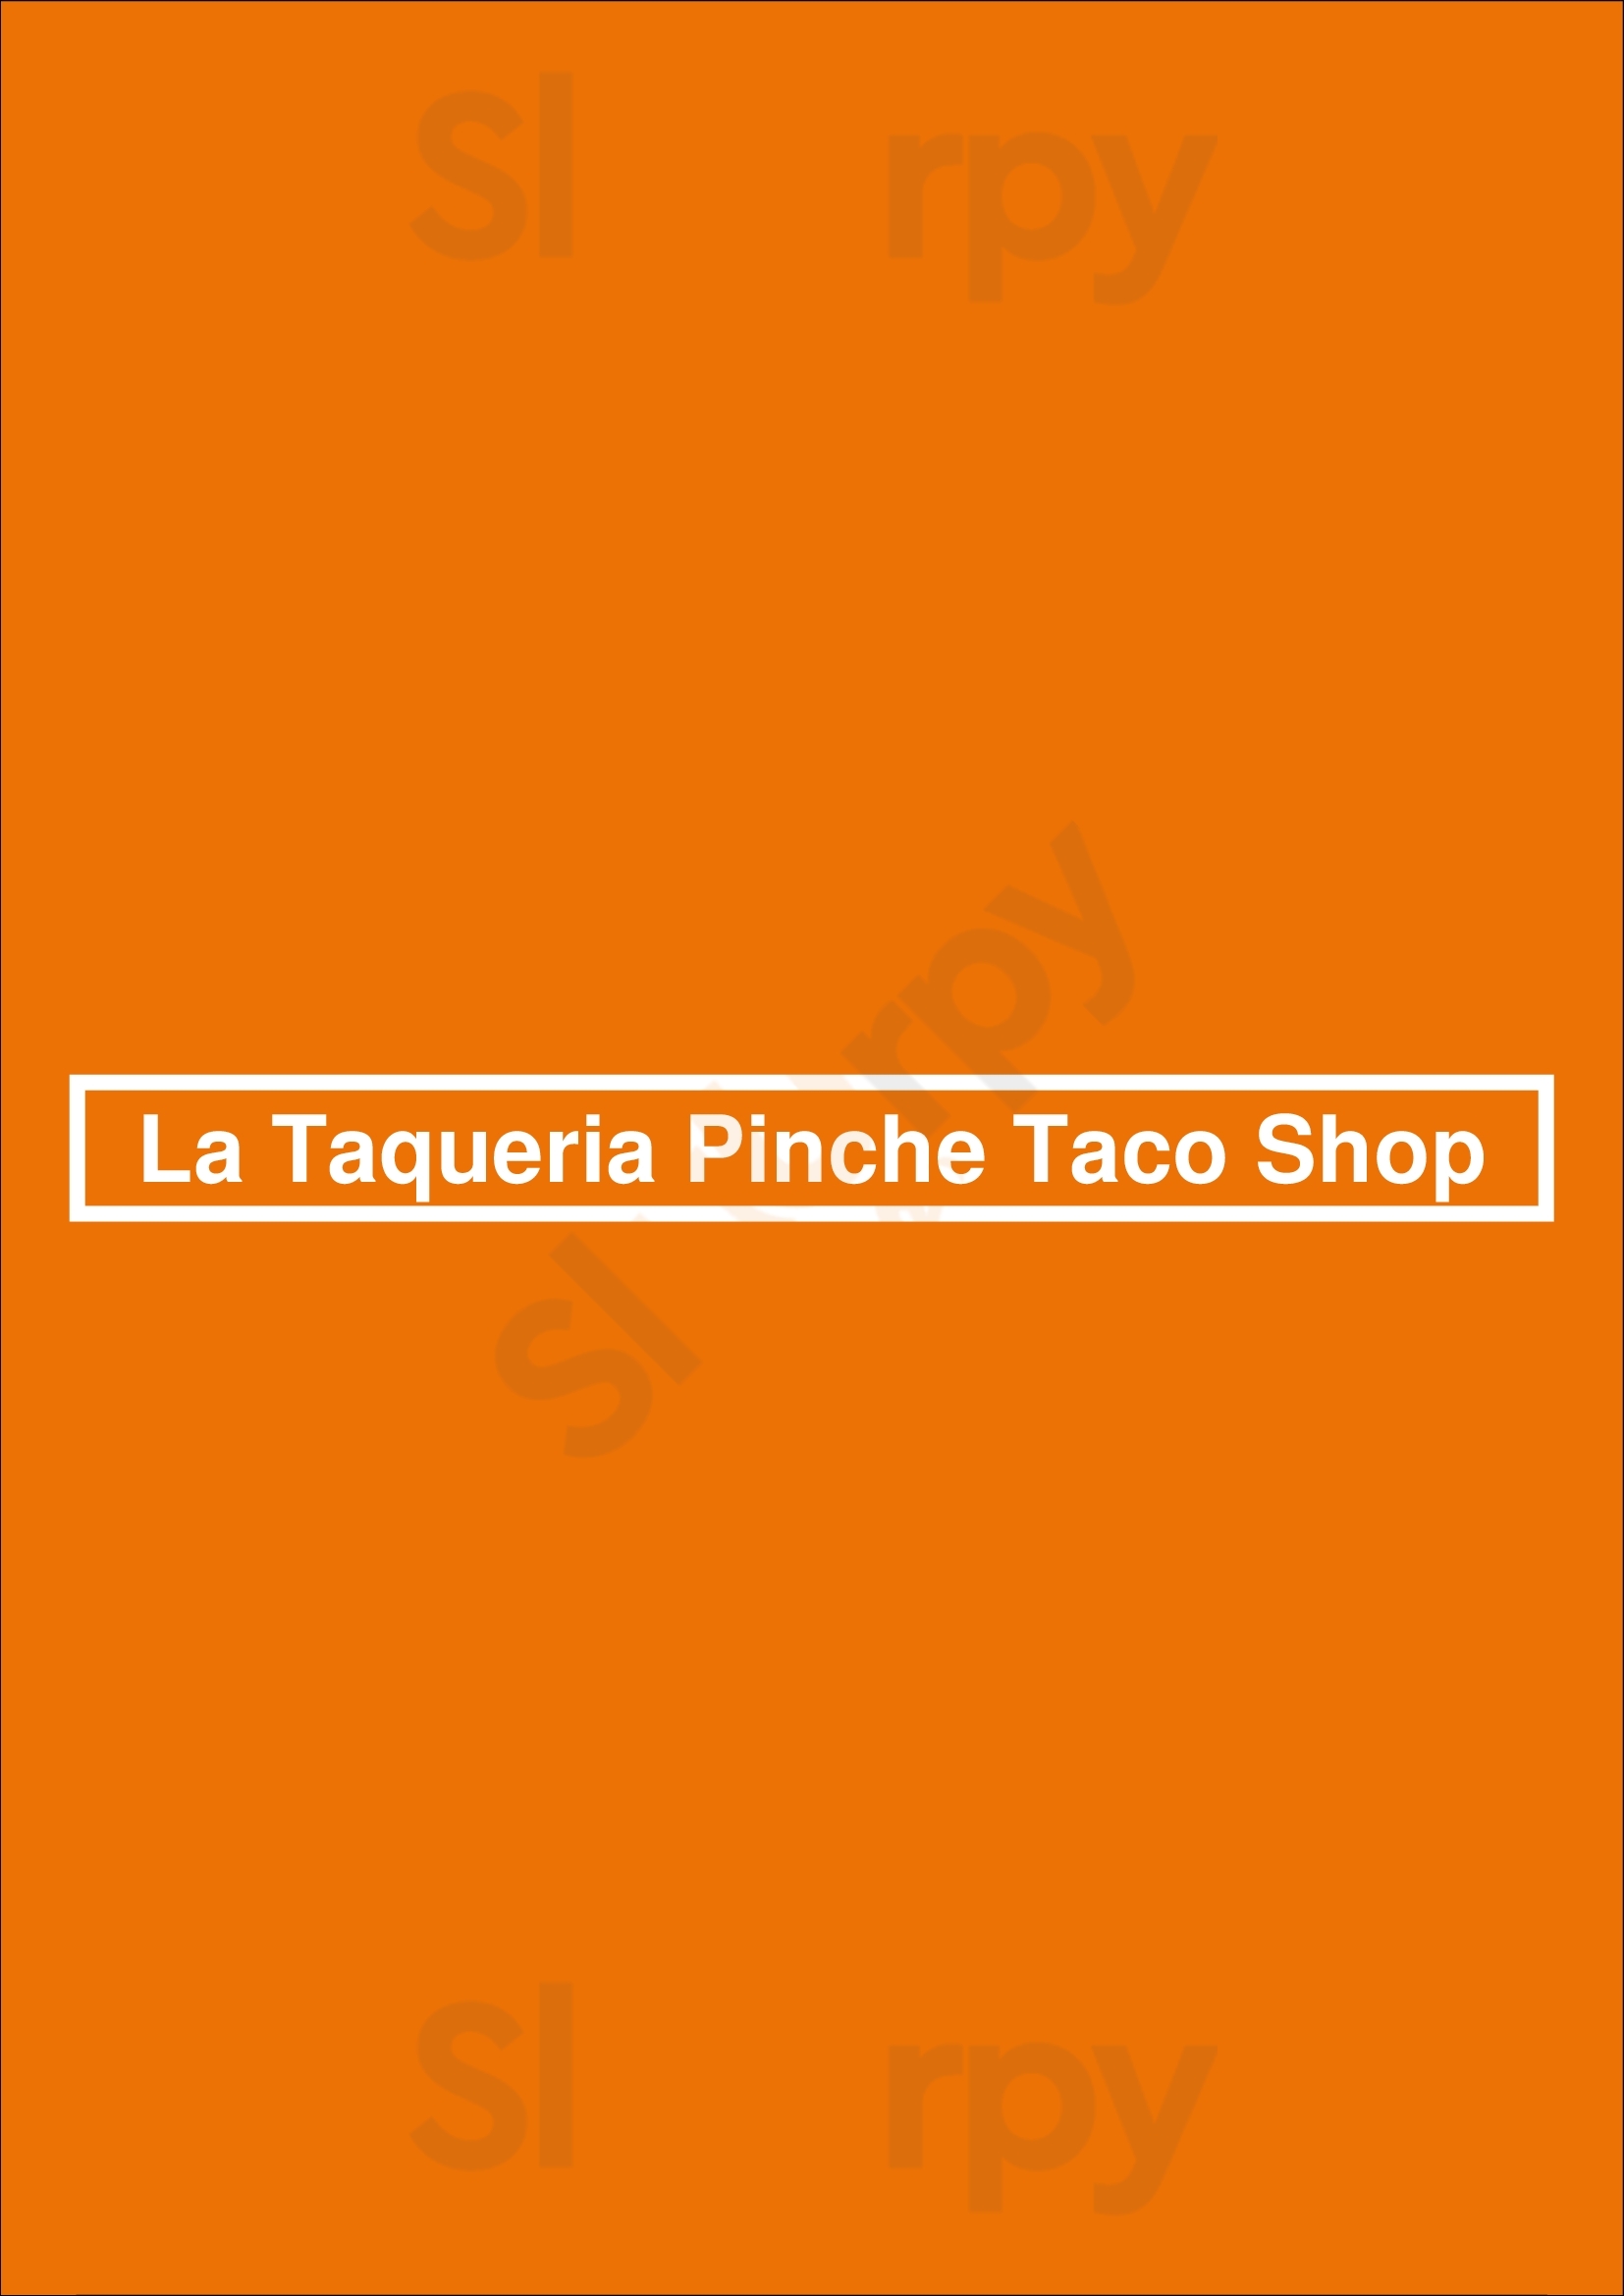 La Taqueria Pinche Taco Shop Victoria Menu - 1